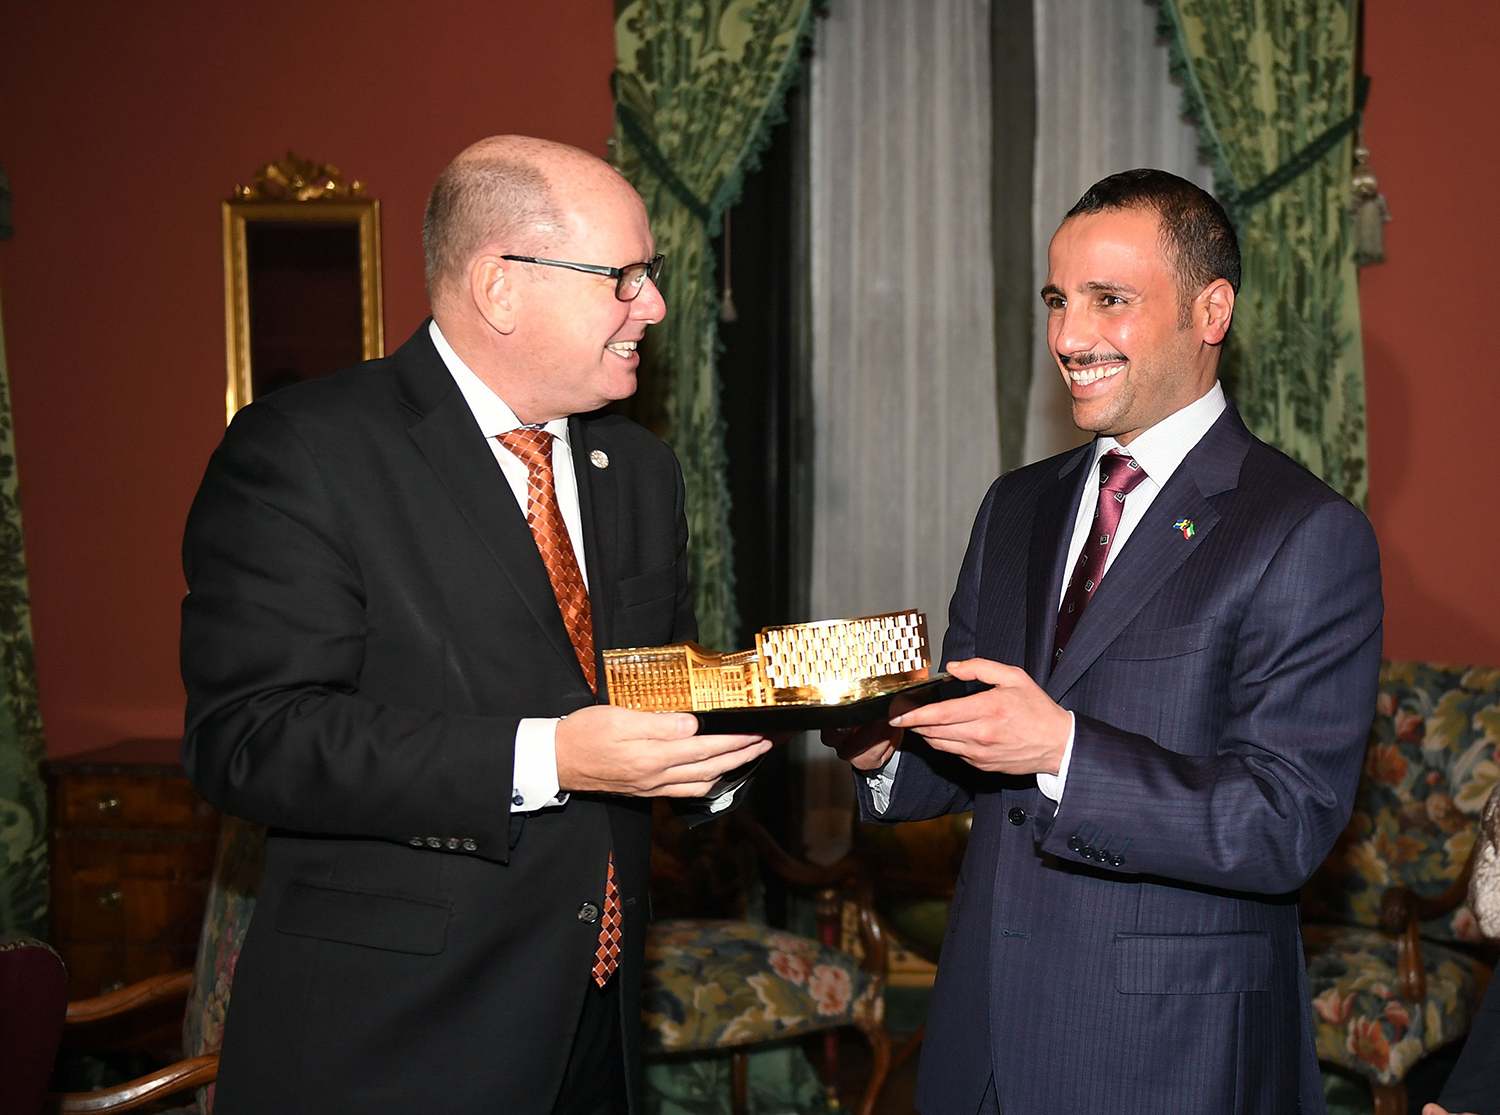 National Assembly Speaker Marzouq Ali Al-Ghanim with Swedish Parliament Speaker Urban Ahlin